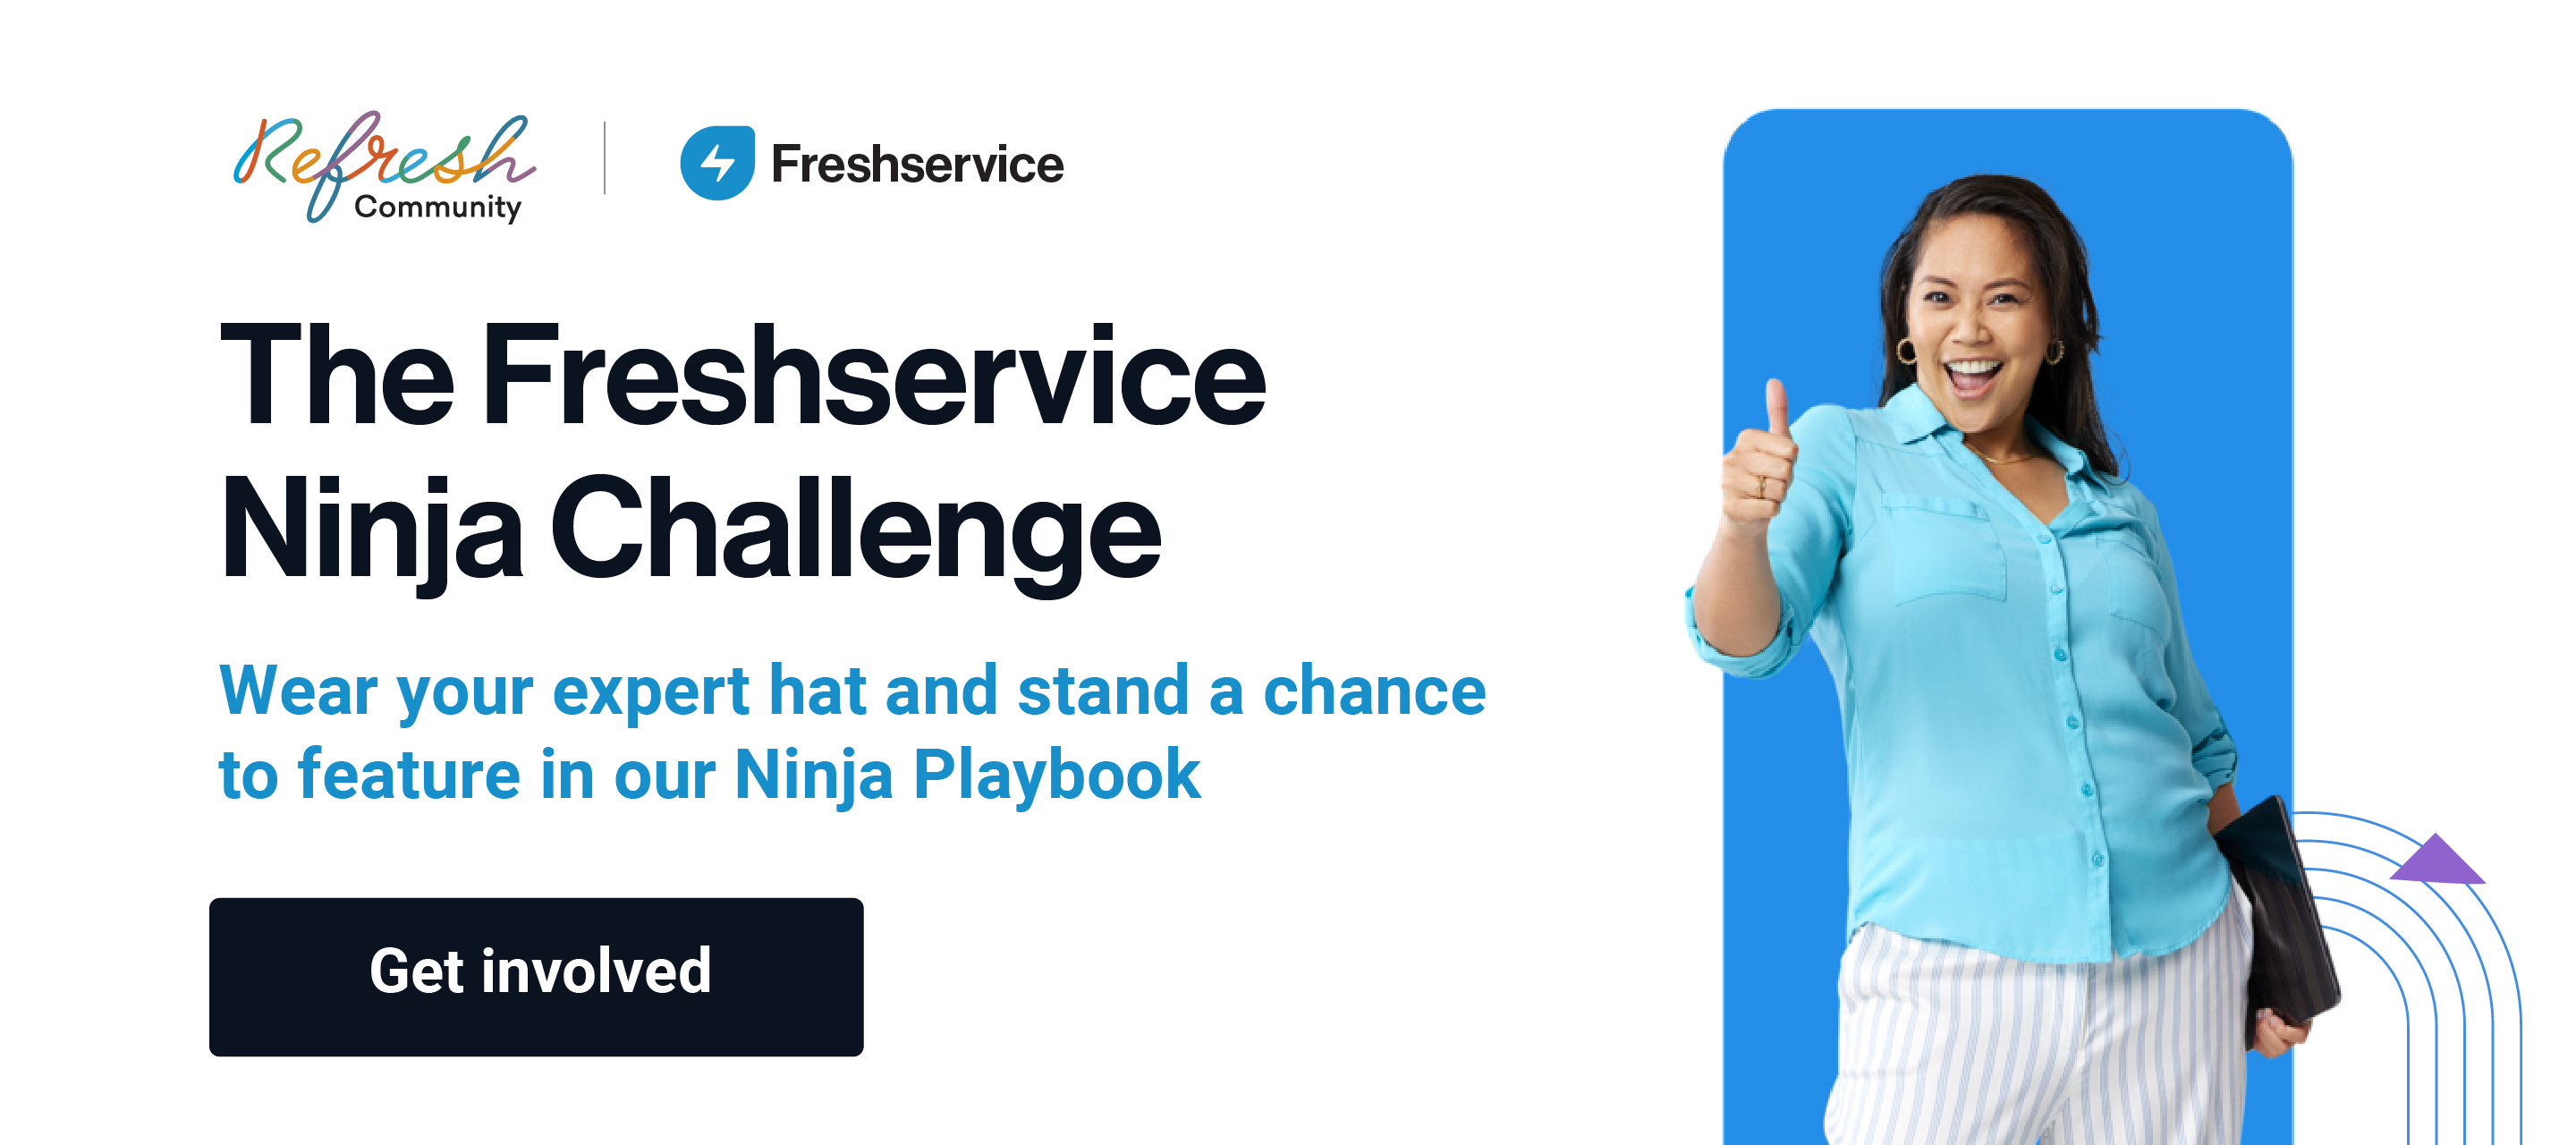 The Freshservice Ninja Challenge - Call for entries!